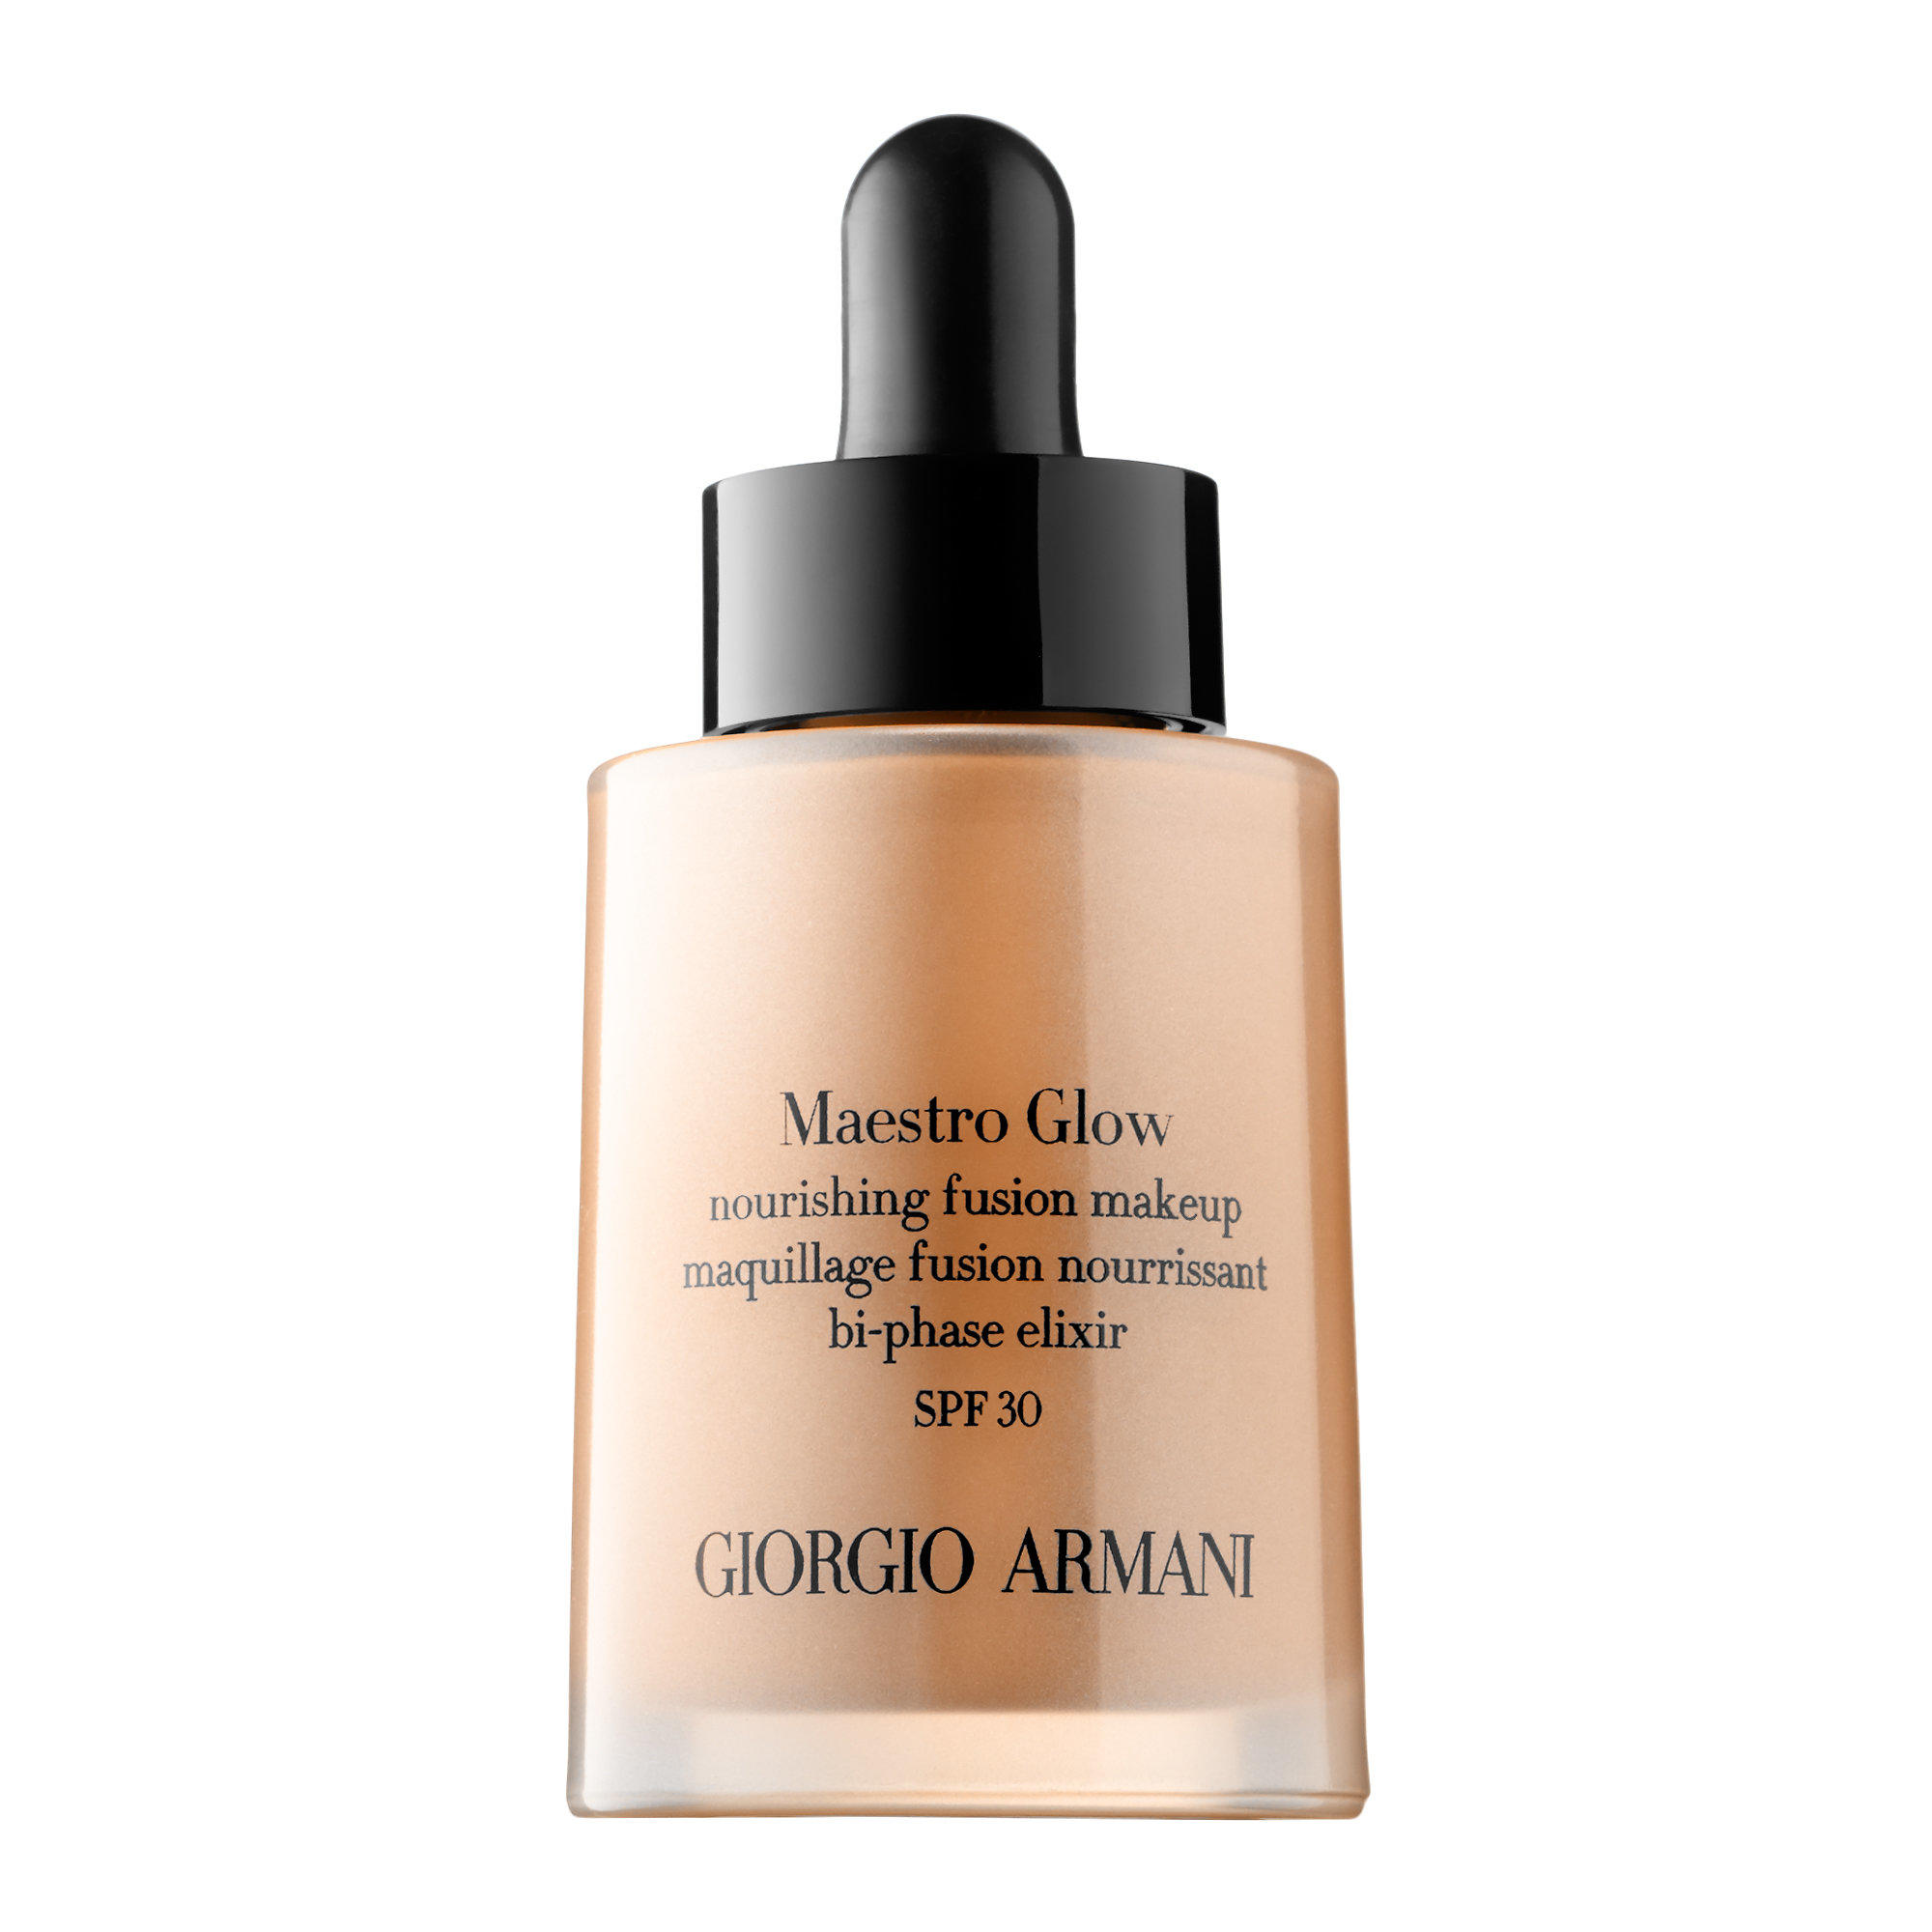 Giorgio Armani Beauty Maestro Glow Nourishing Fusion Makeup 2